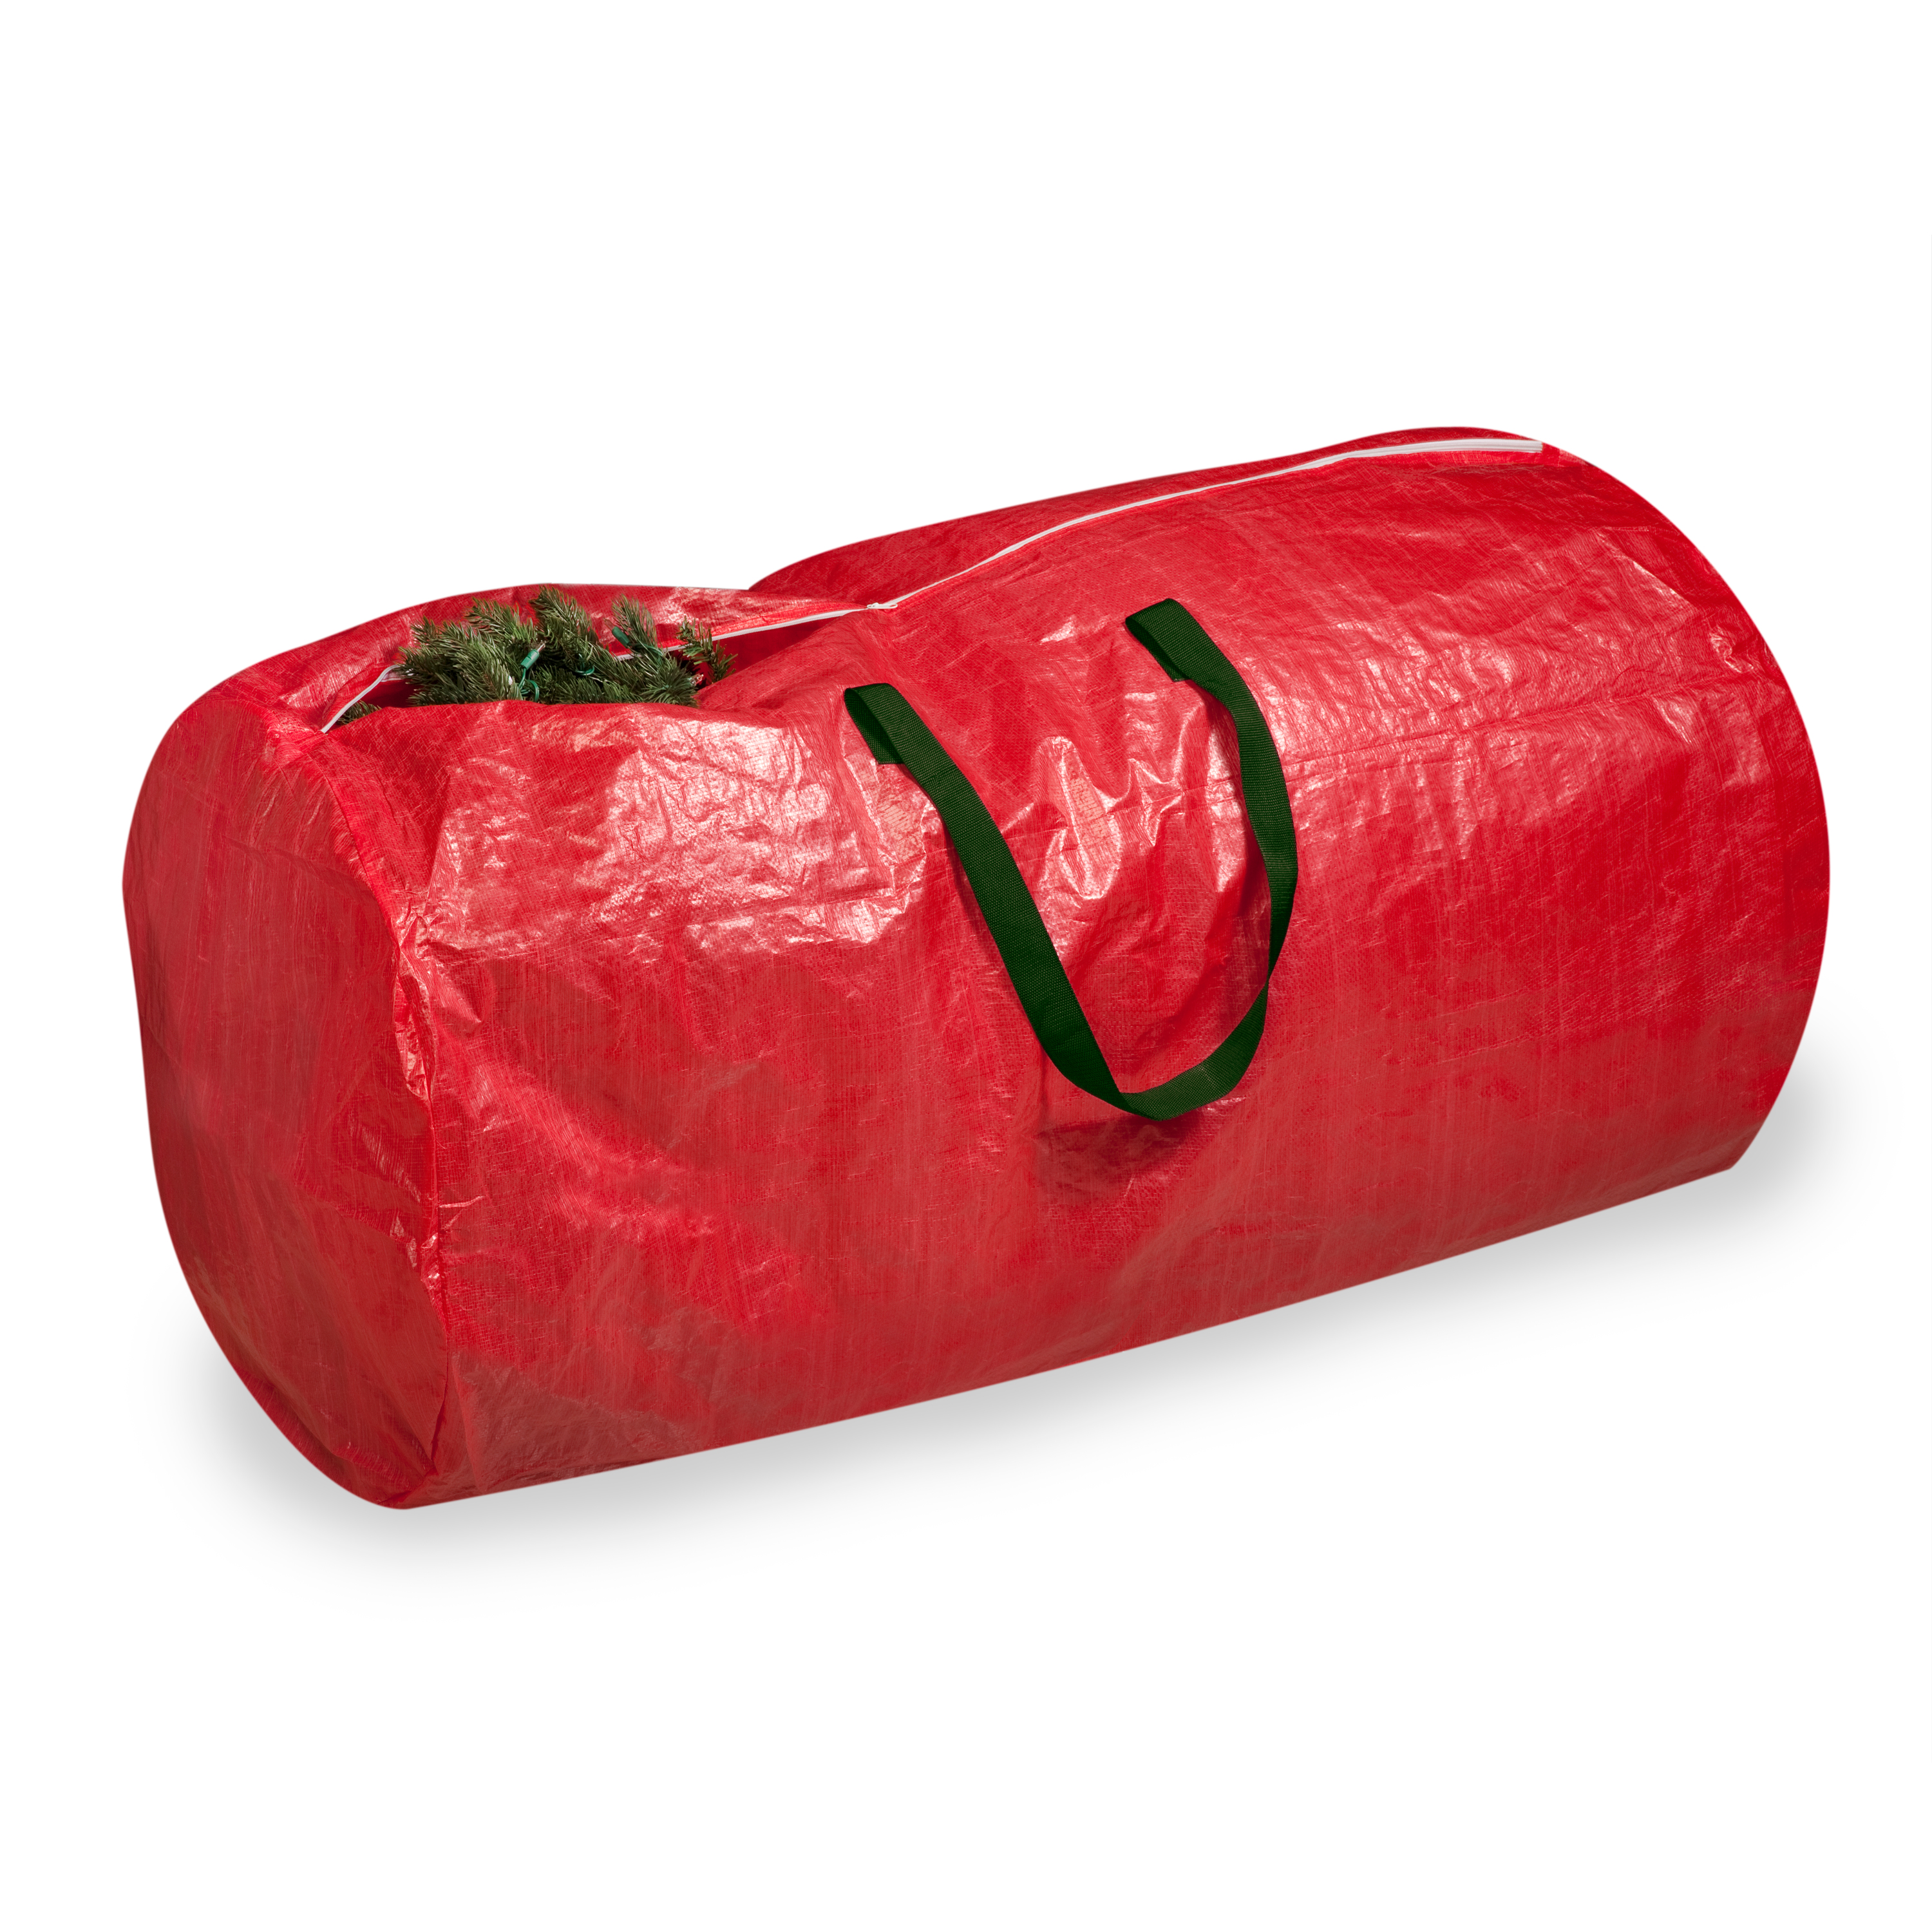 Honey-Can-Do Polyethylene 7' Christmas Tree Storage Bag with Handles, Red - image 4 of 6